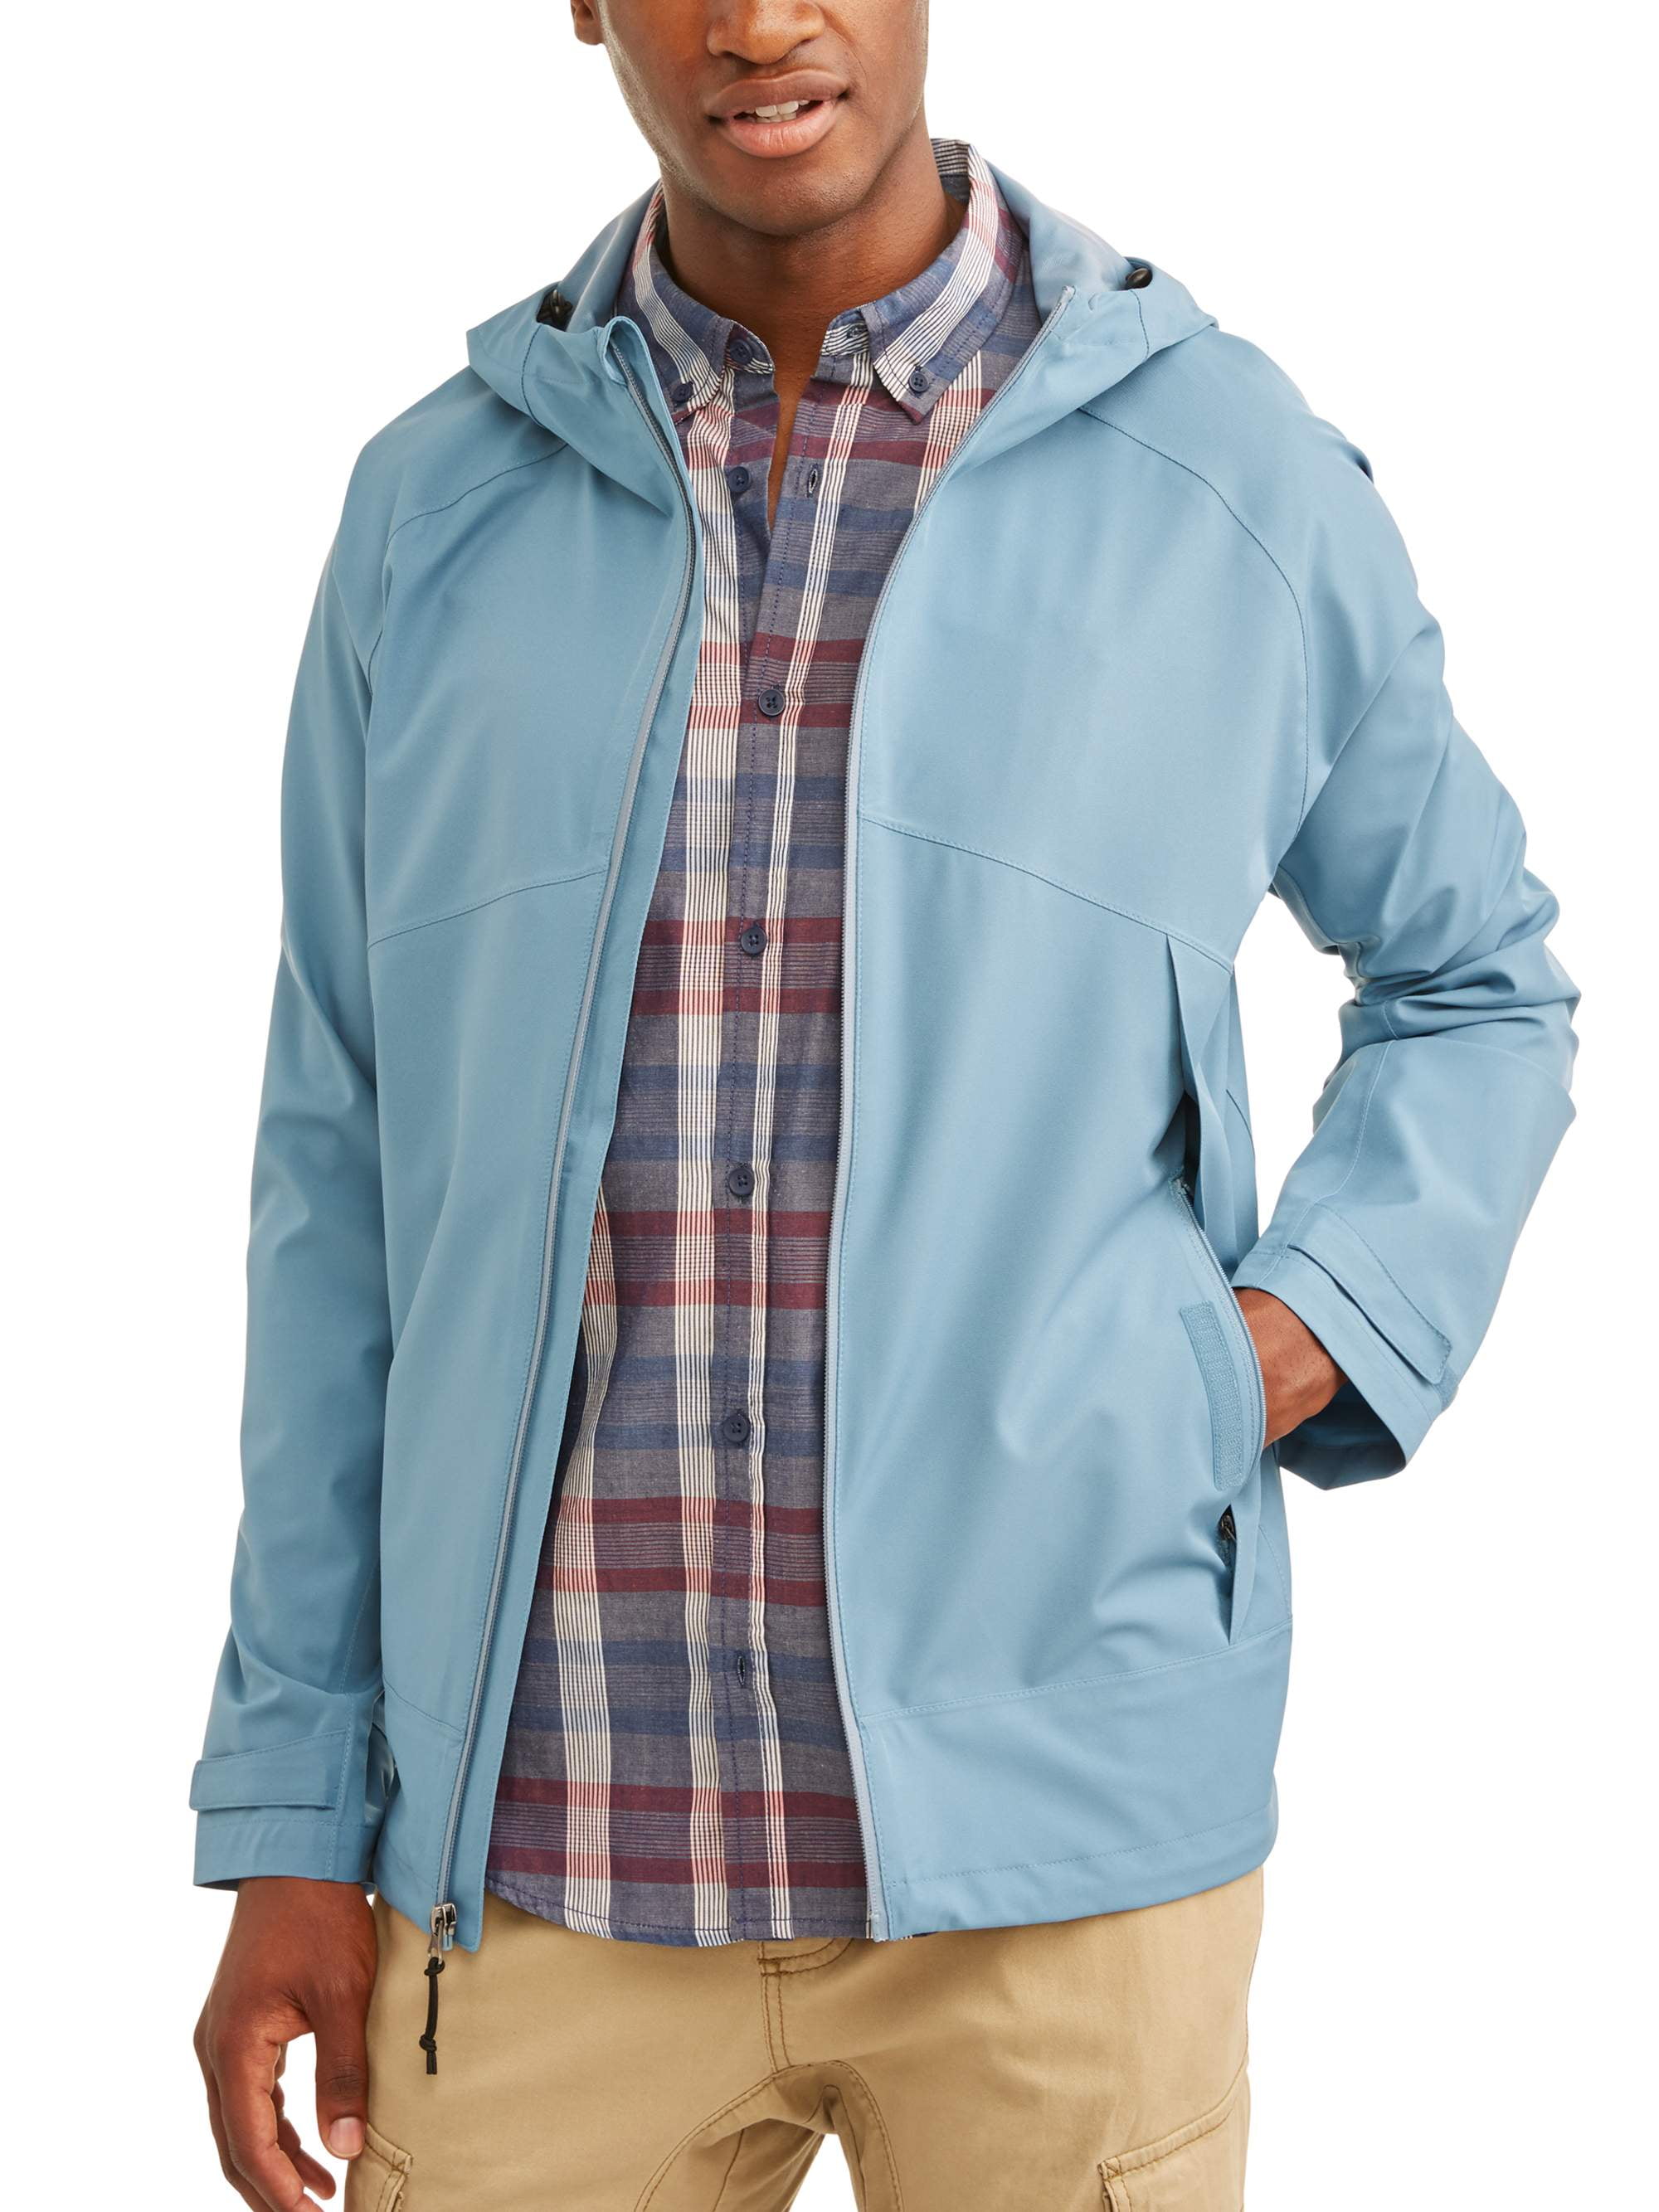 George Men's rain shell jacket up to size 5xl - Walmart.com